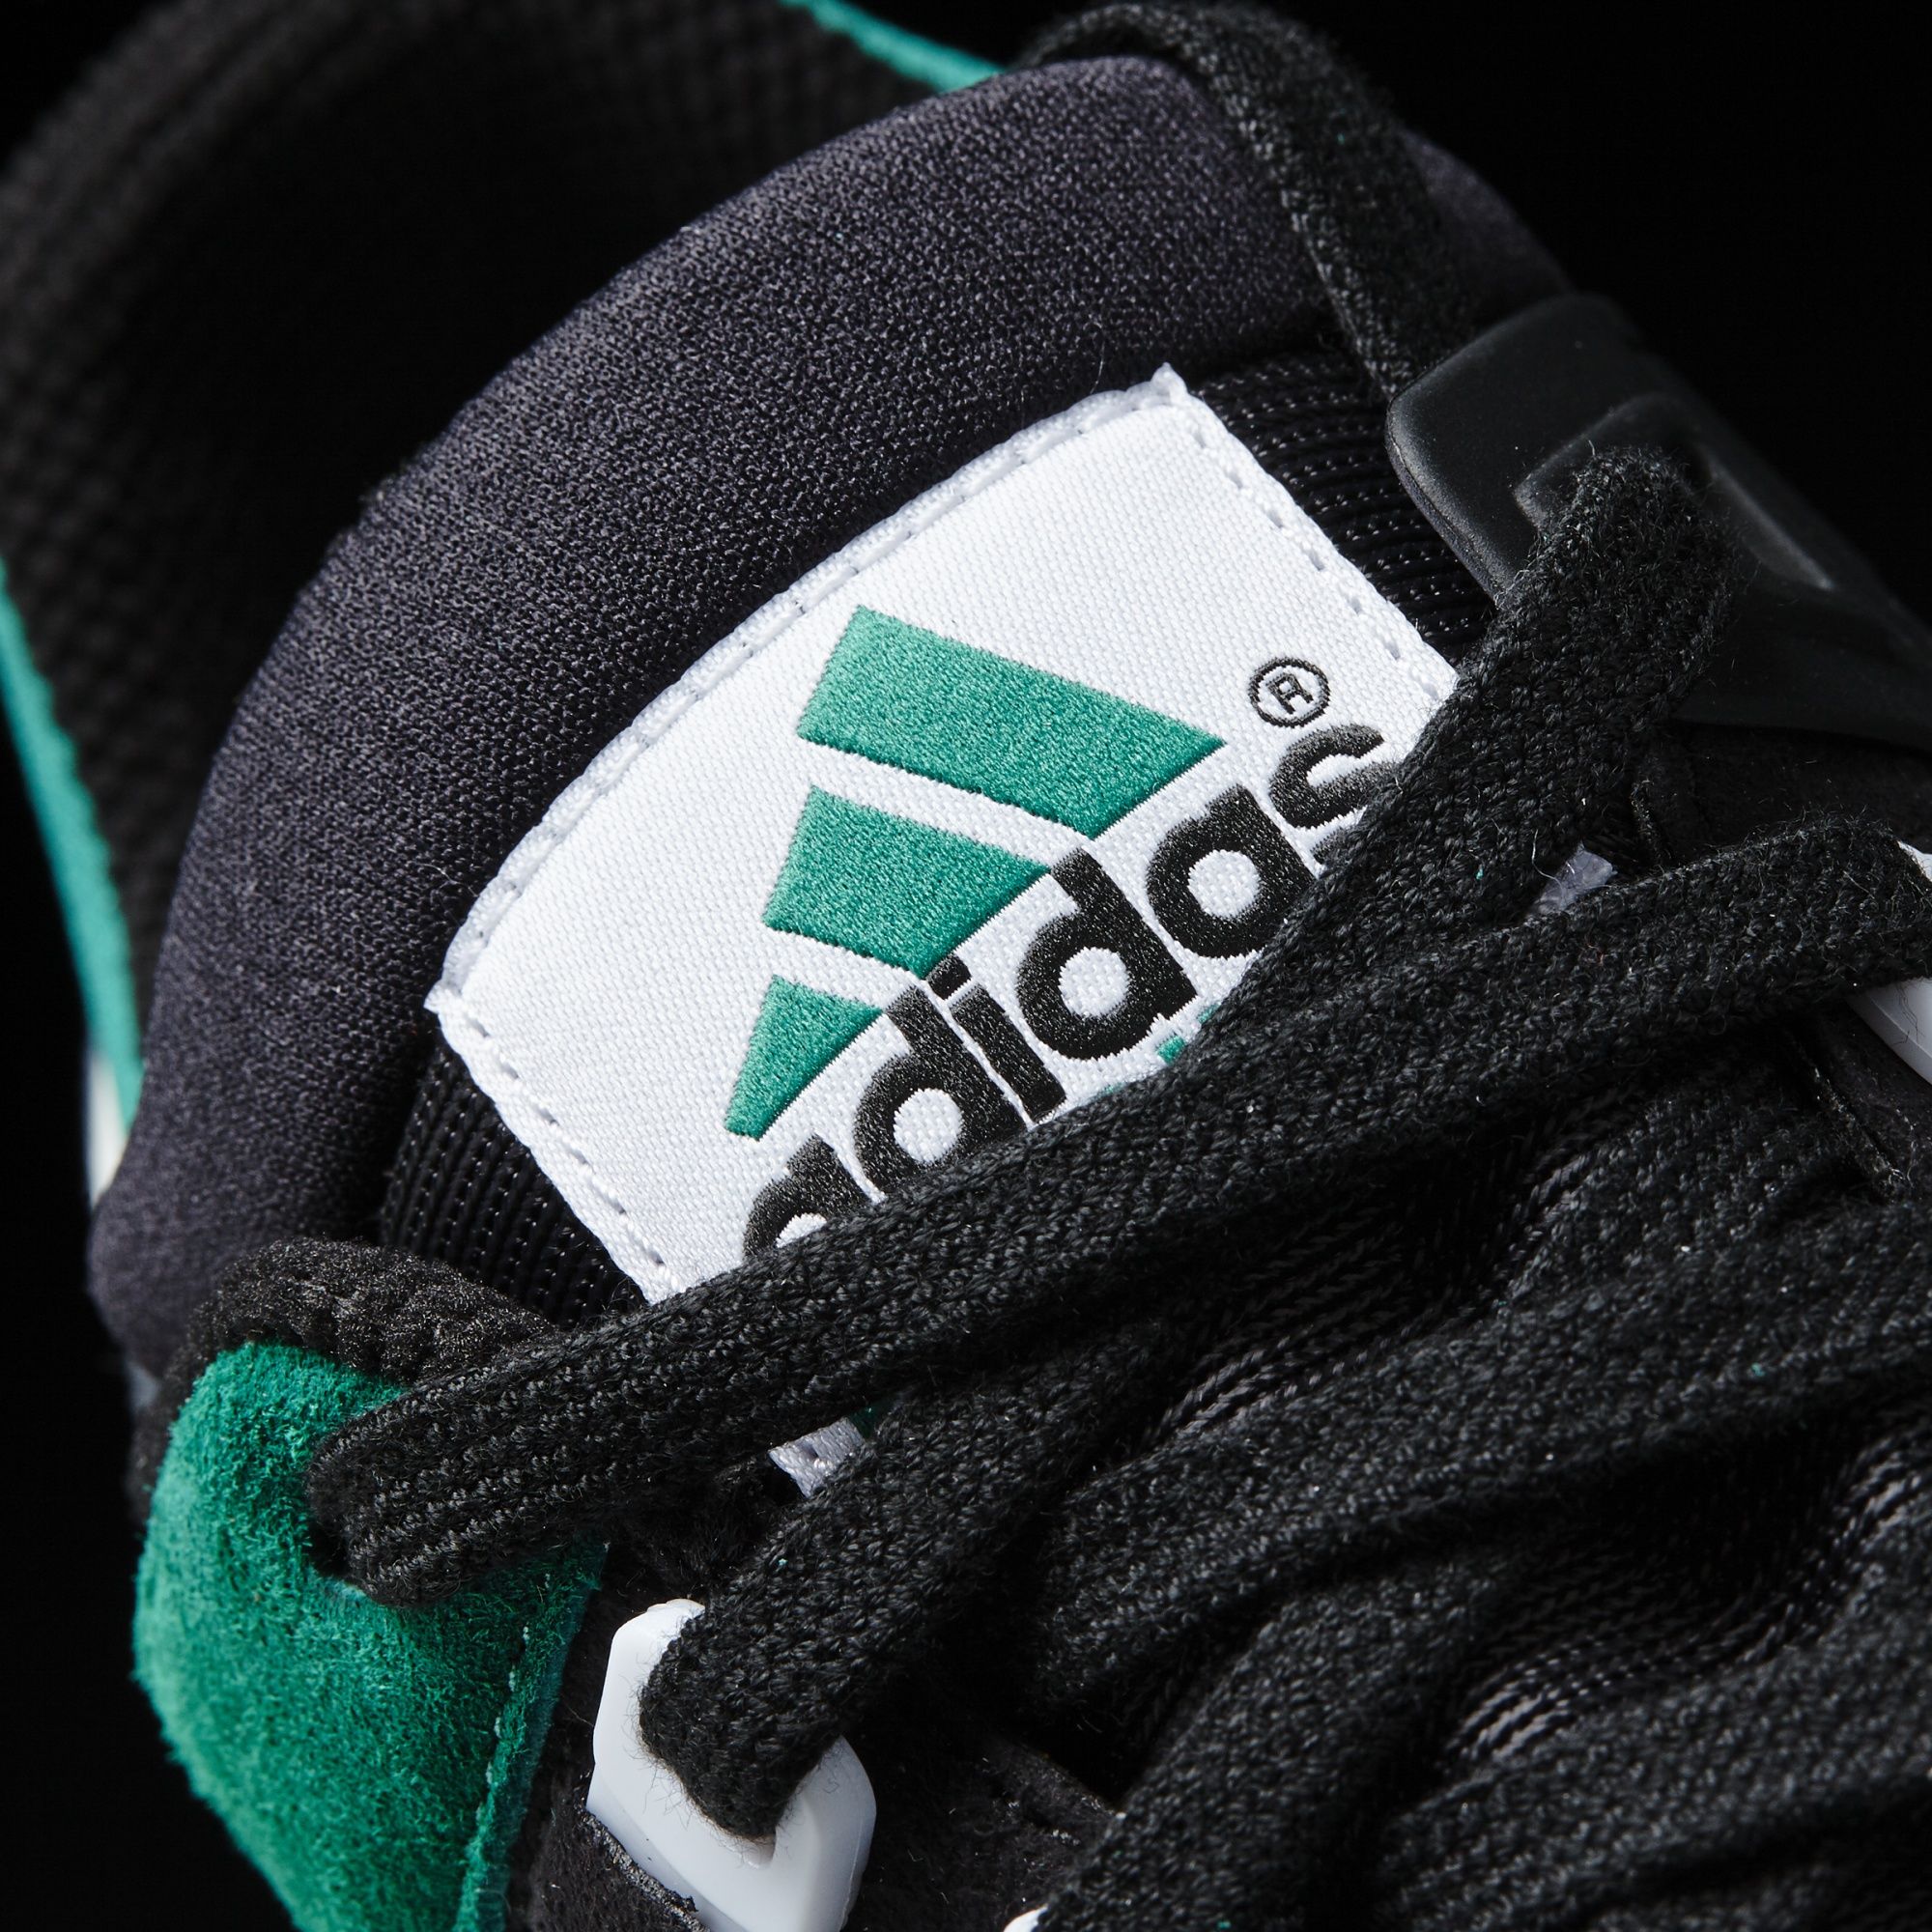 Adidas EQT Support 93/16
Core Black / White / Sub Green